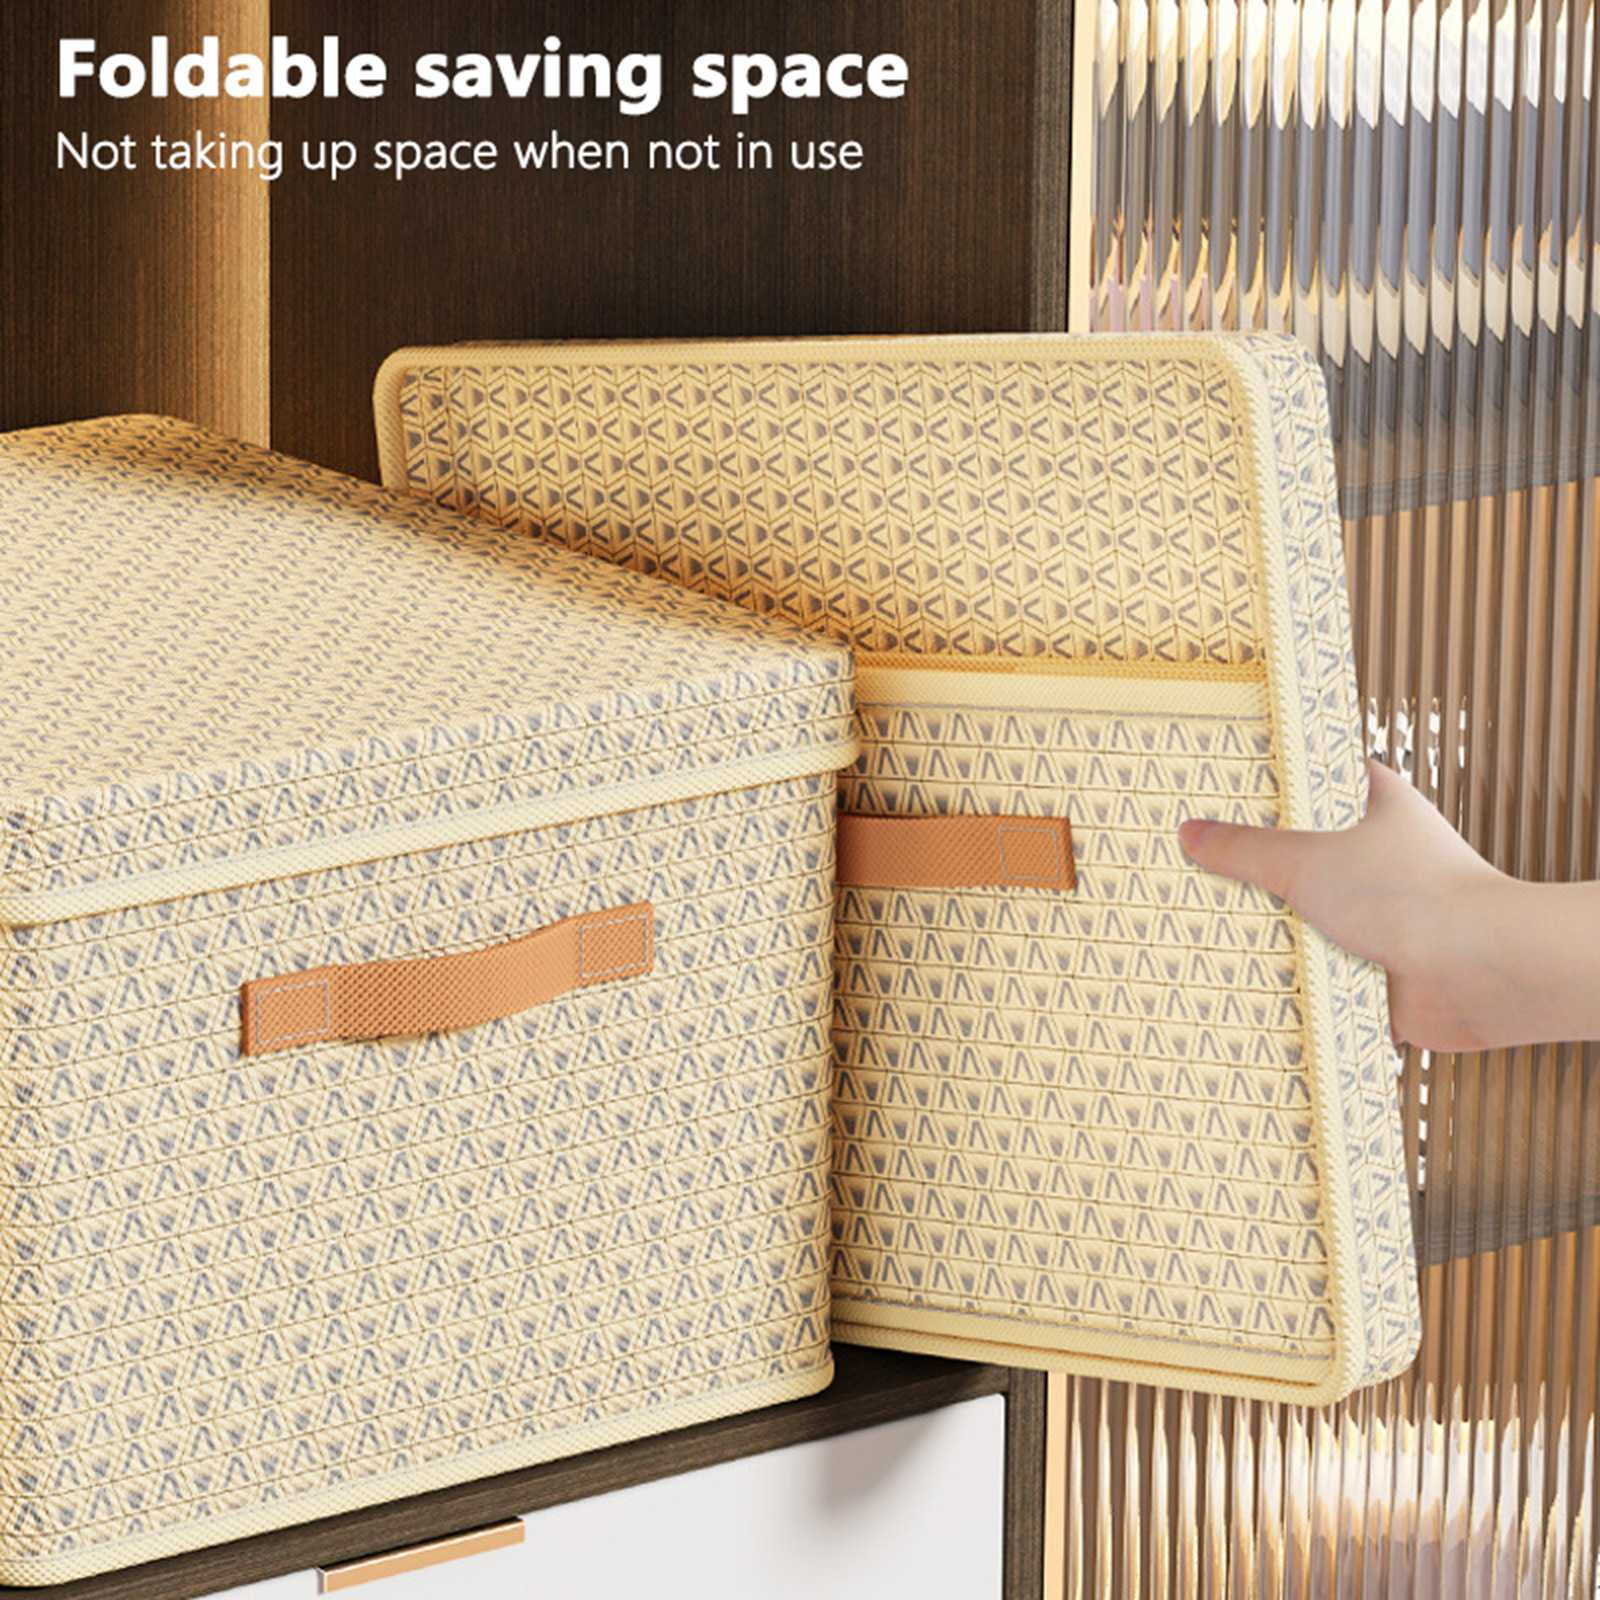 House of Hampton® Fabric Storage Bins With Metal Handles (set Of 6